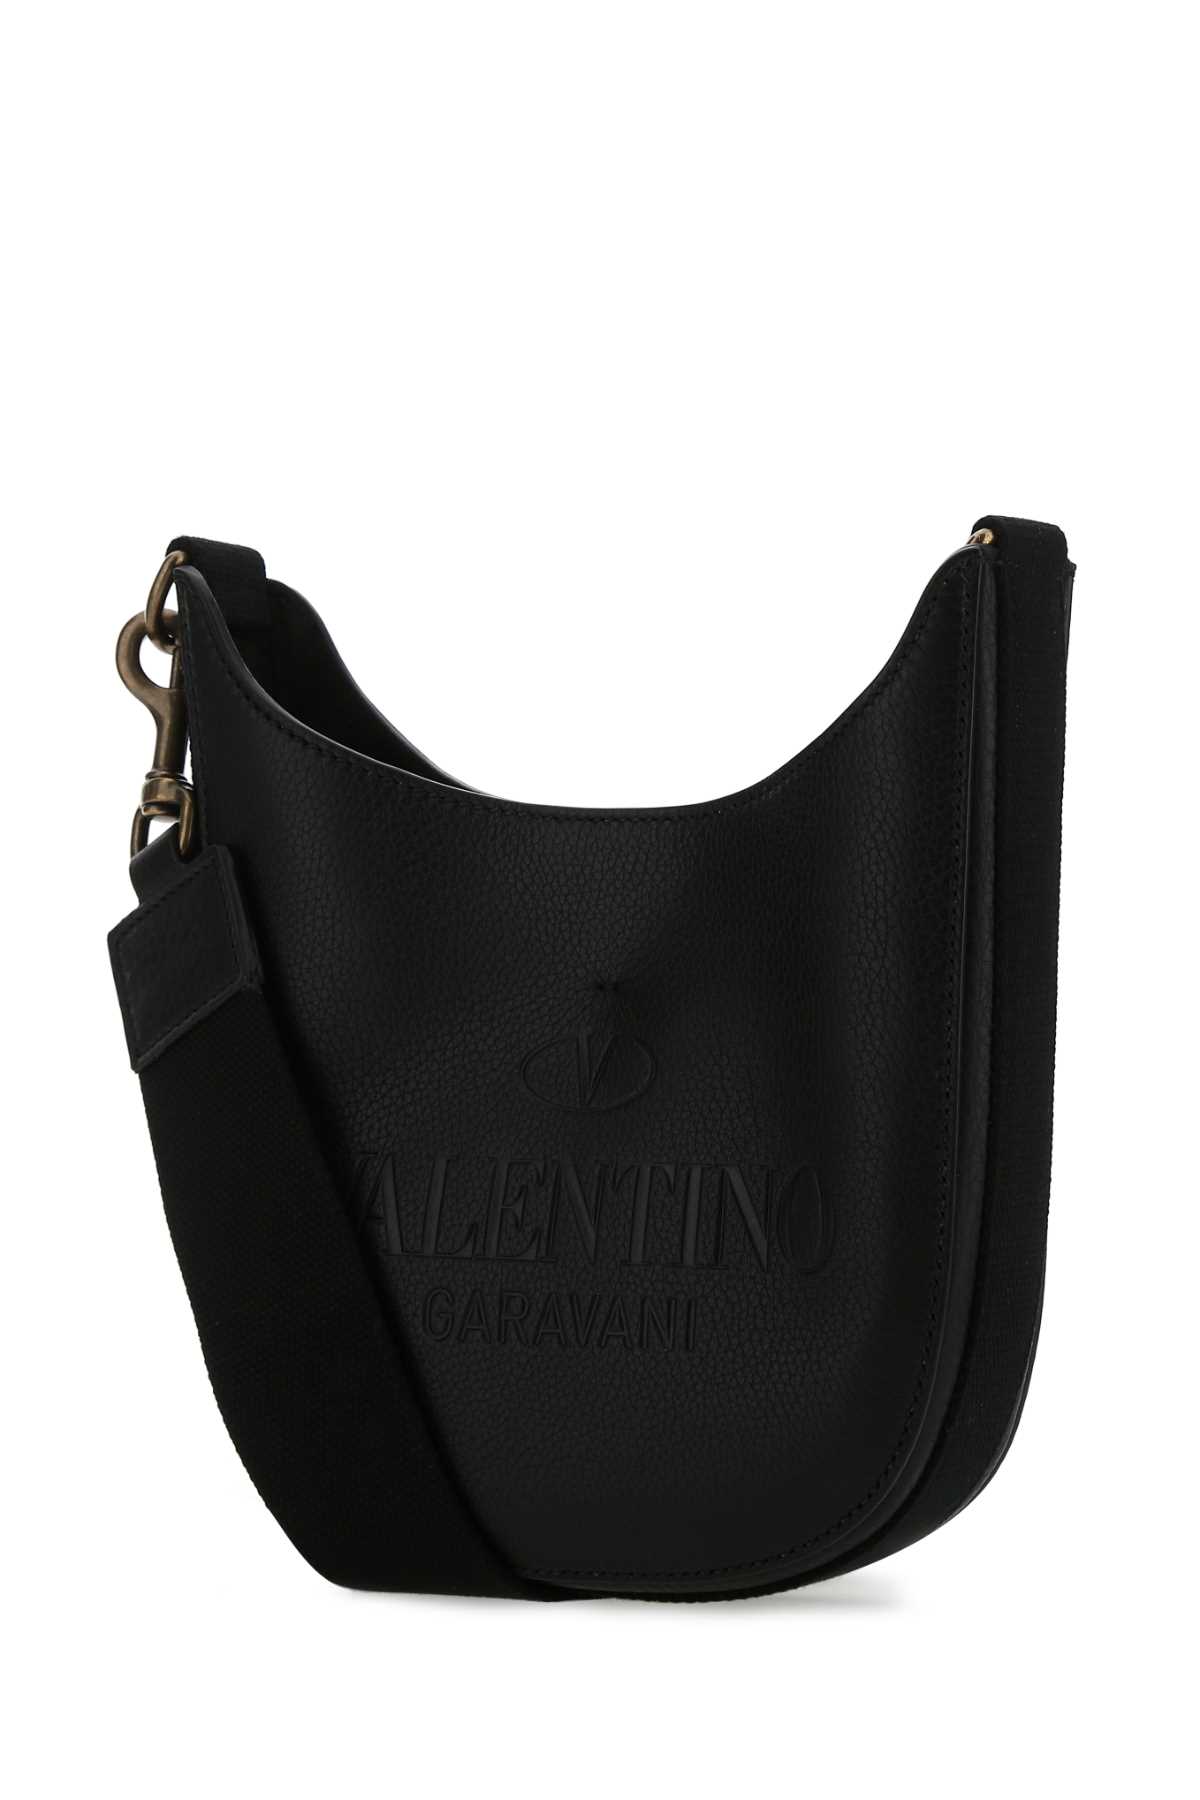 Valentino Garavani Black Leather Identity Crossbody Bag In 0no